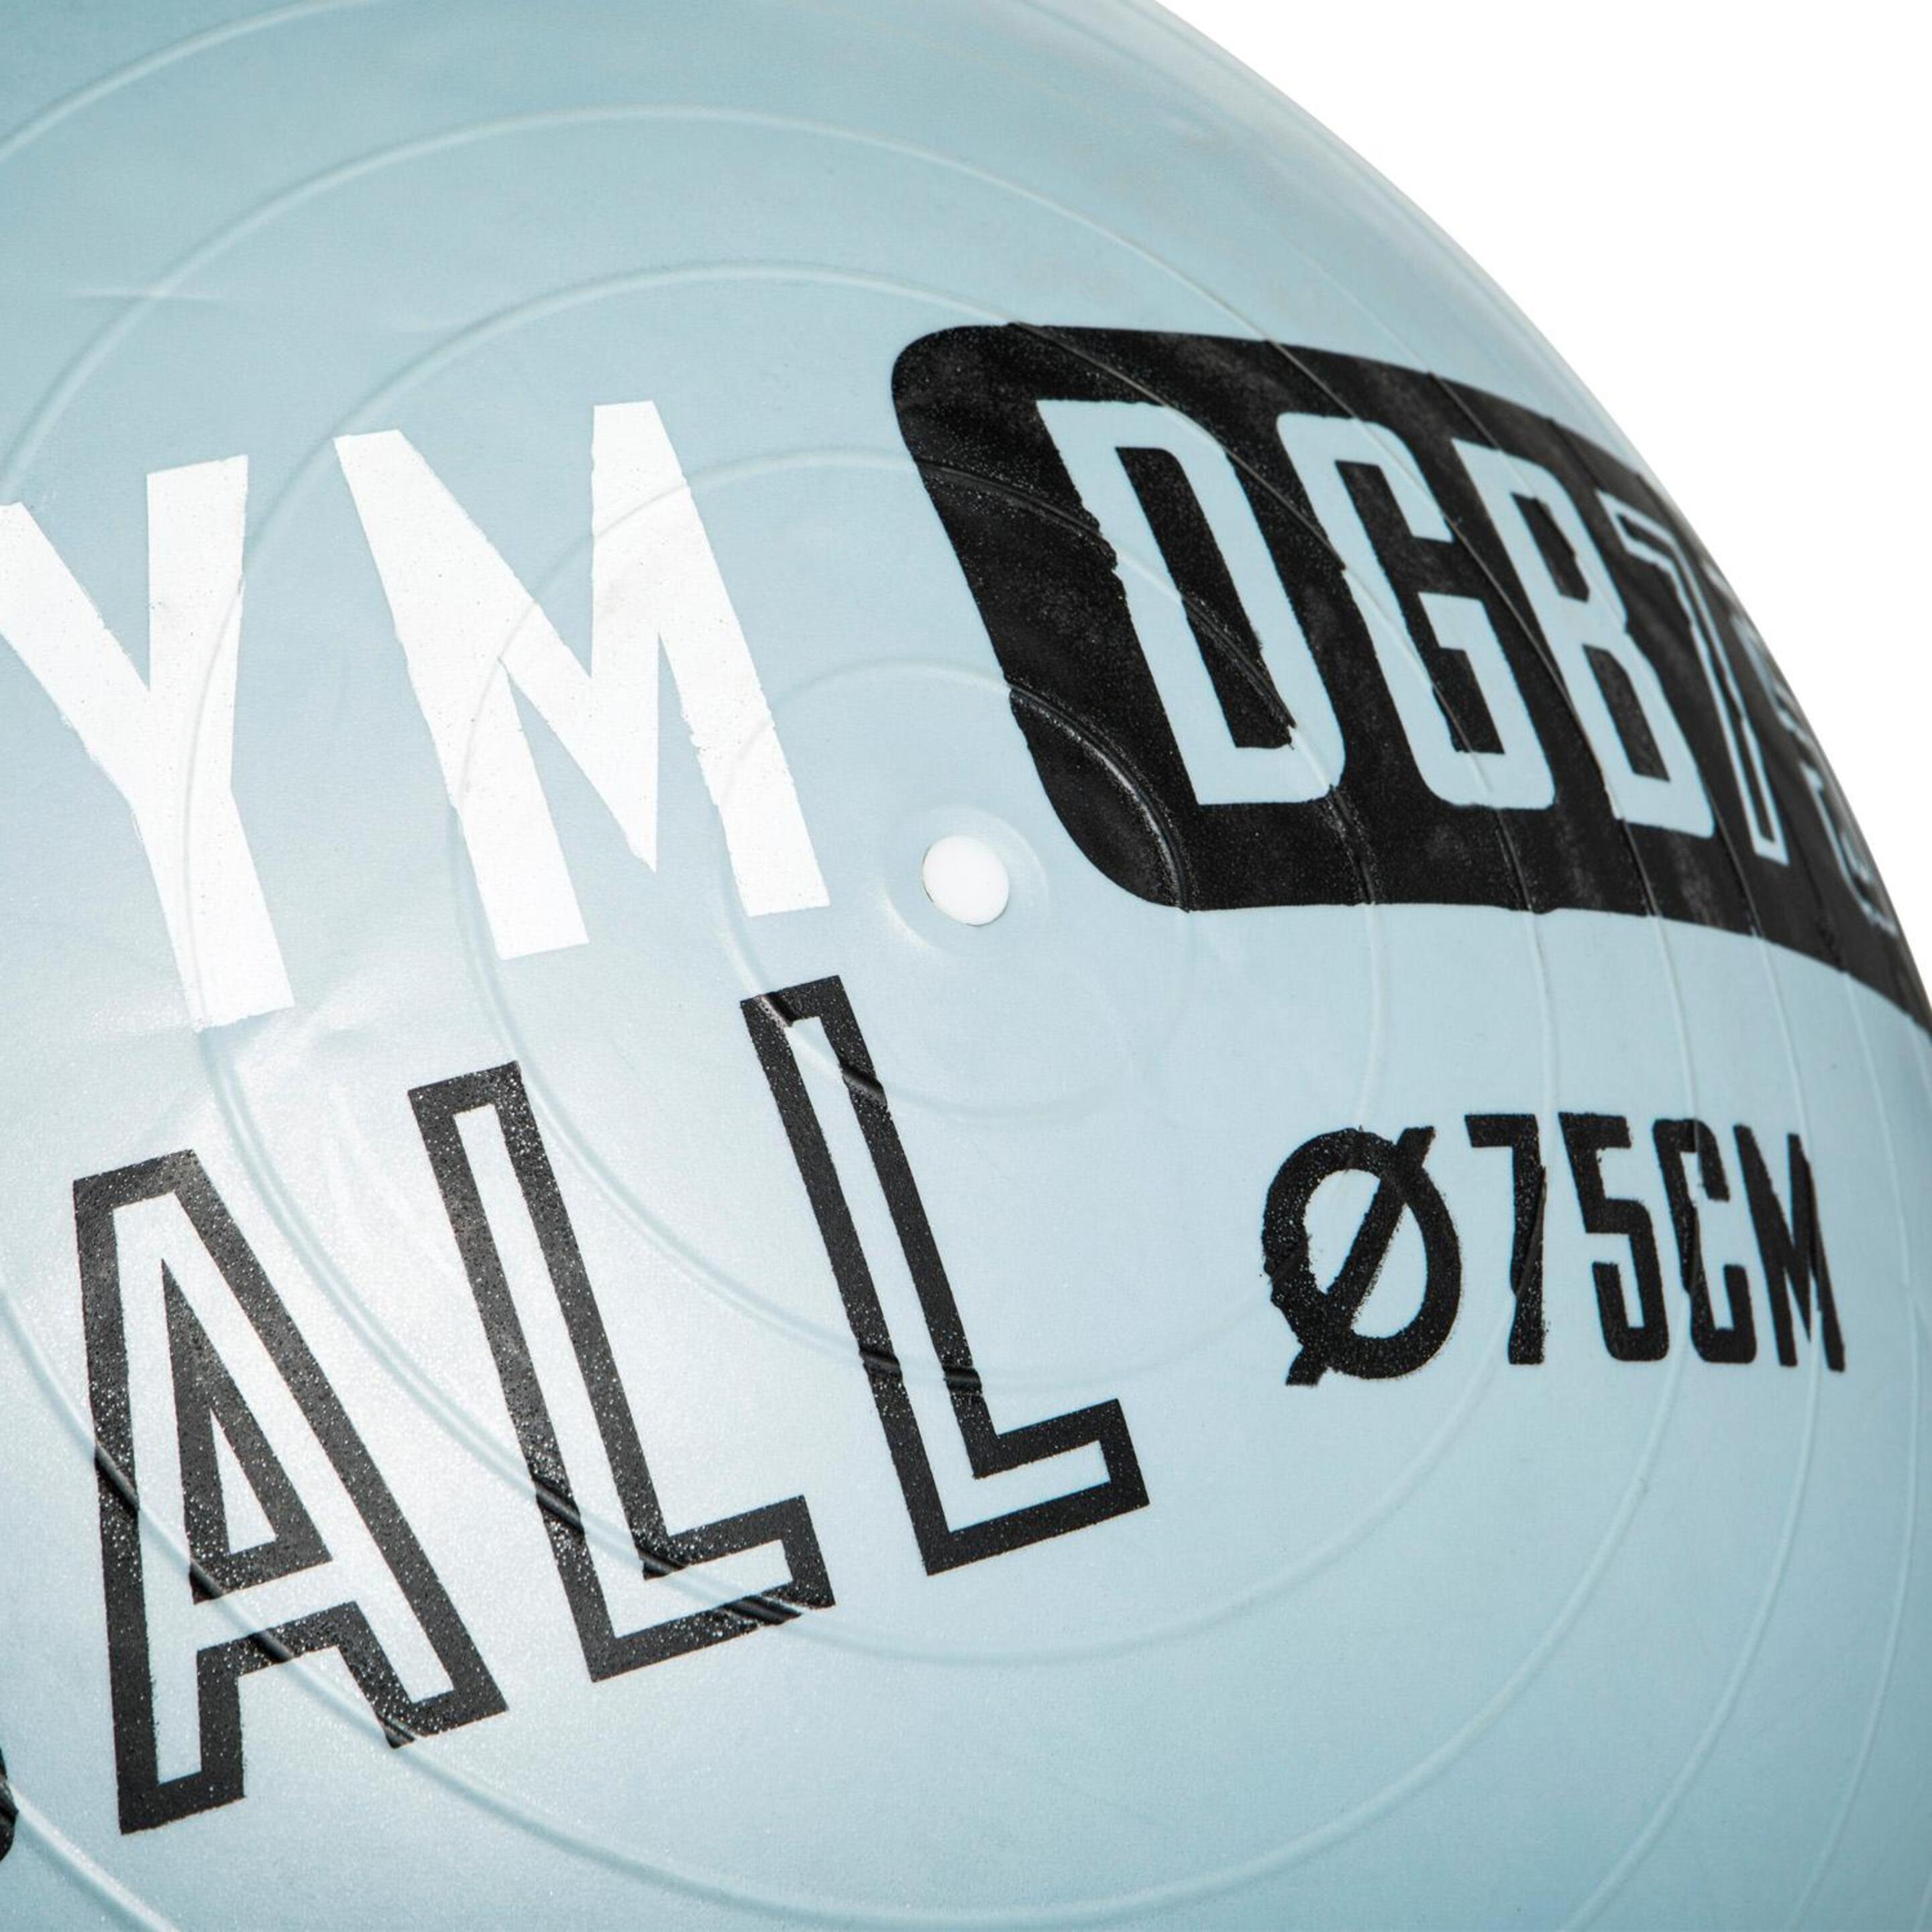 Gymball Bodytone